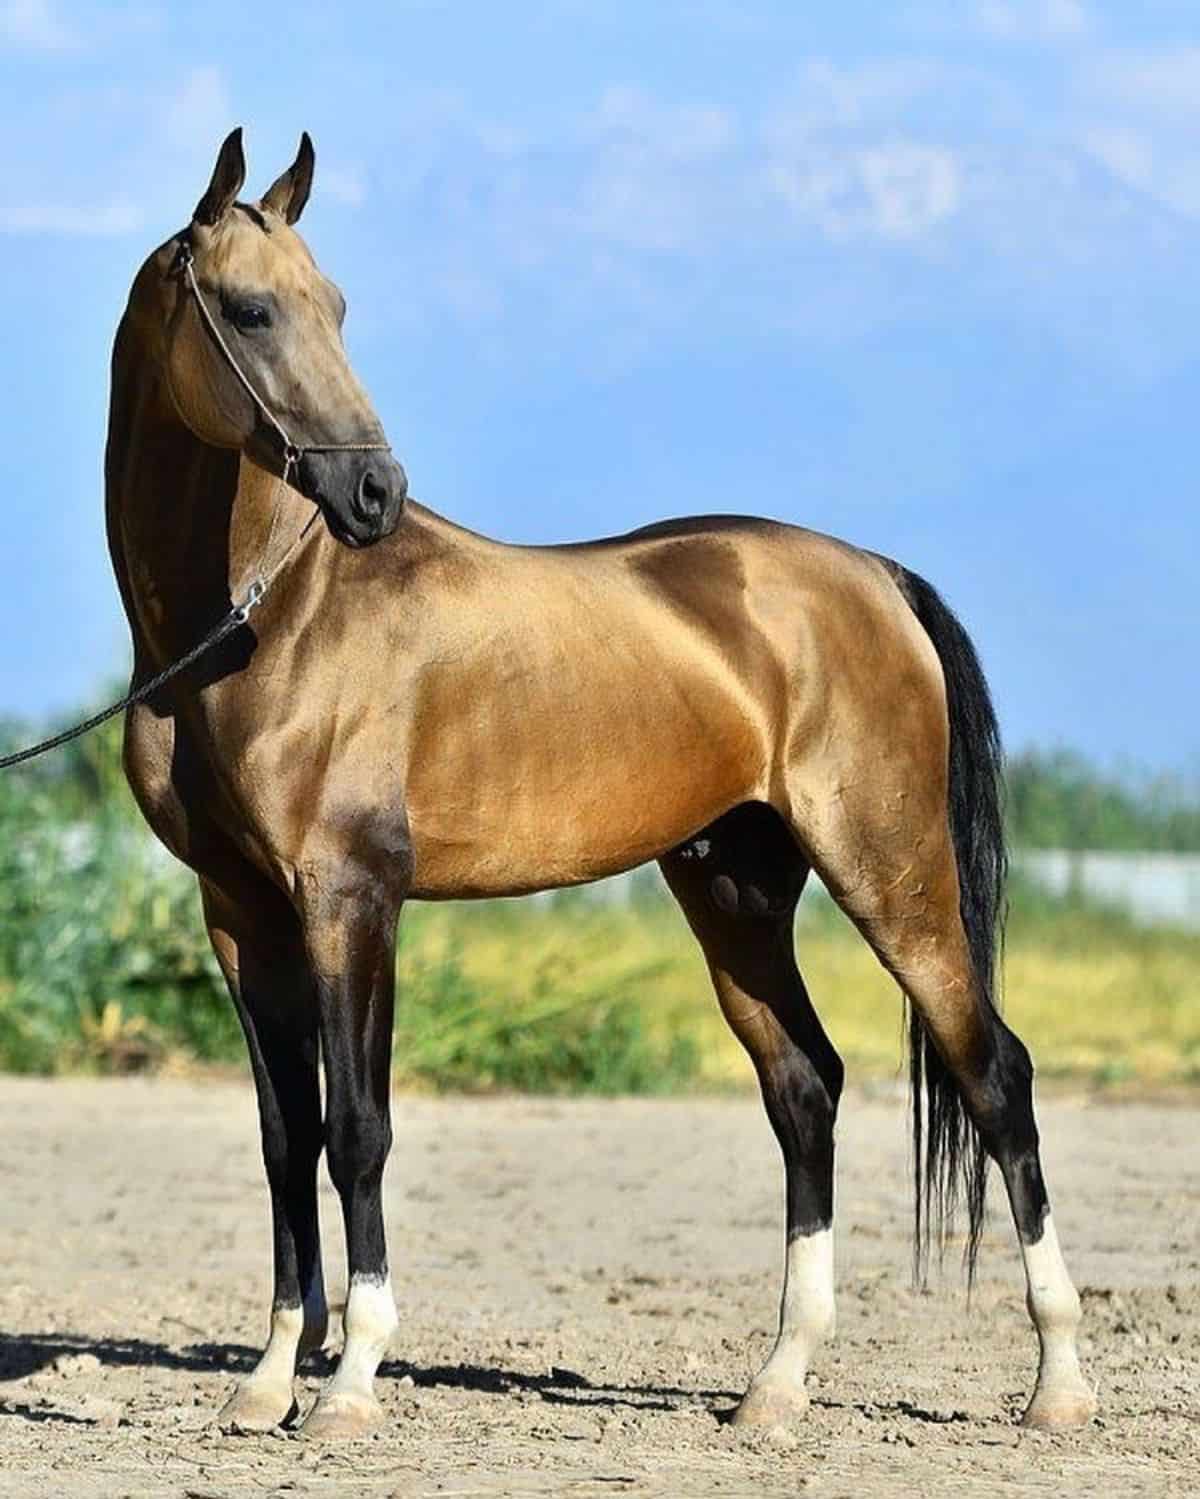 A brown Akhal-Teke horse with white legs.